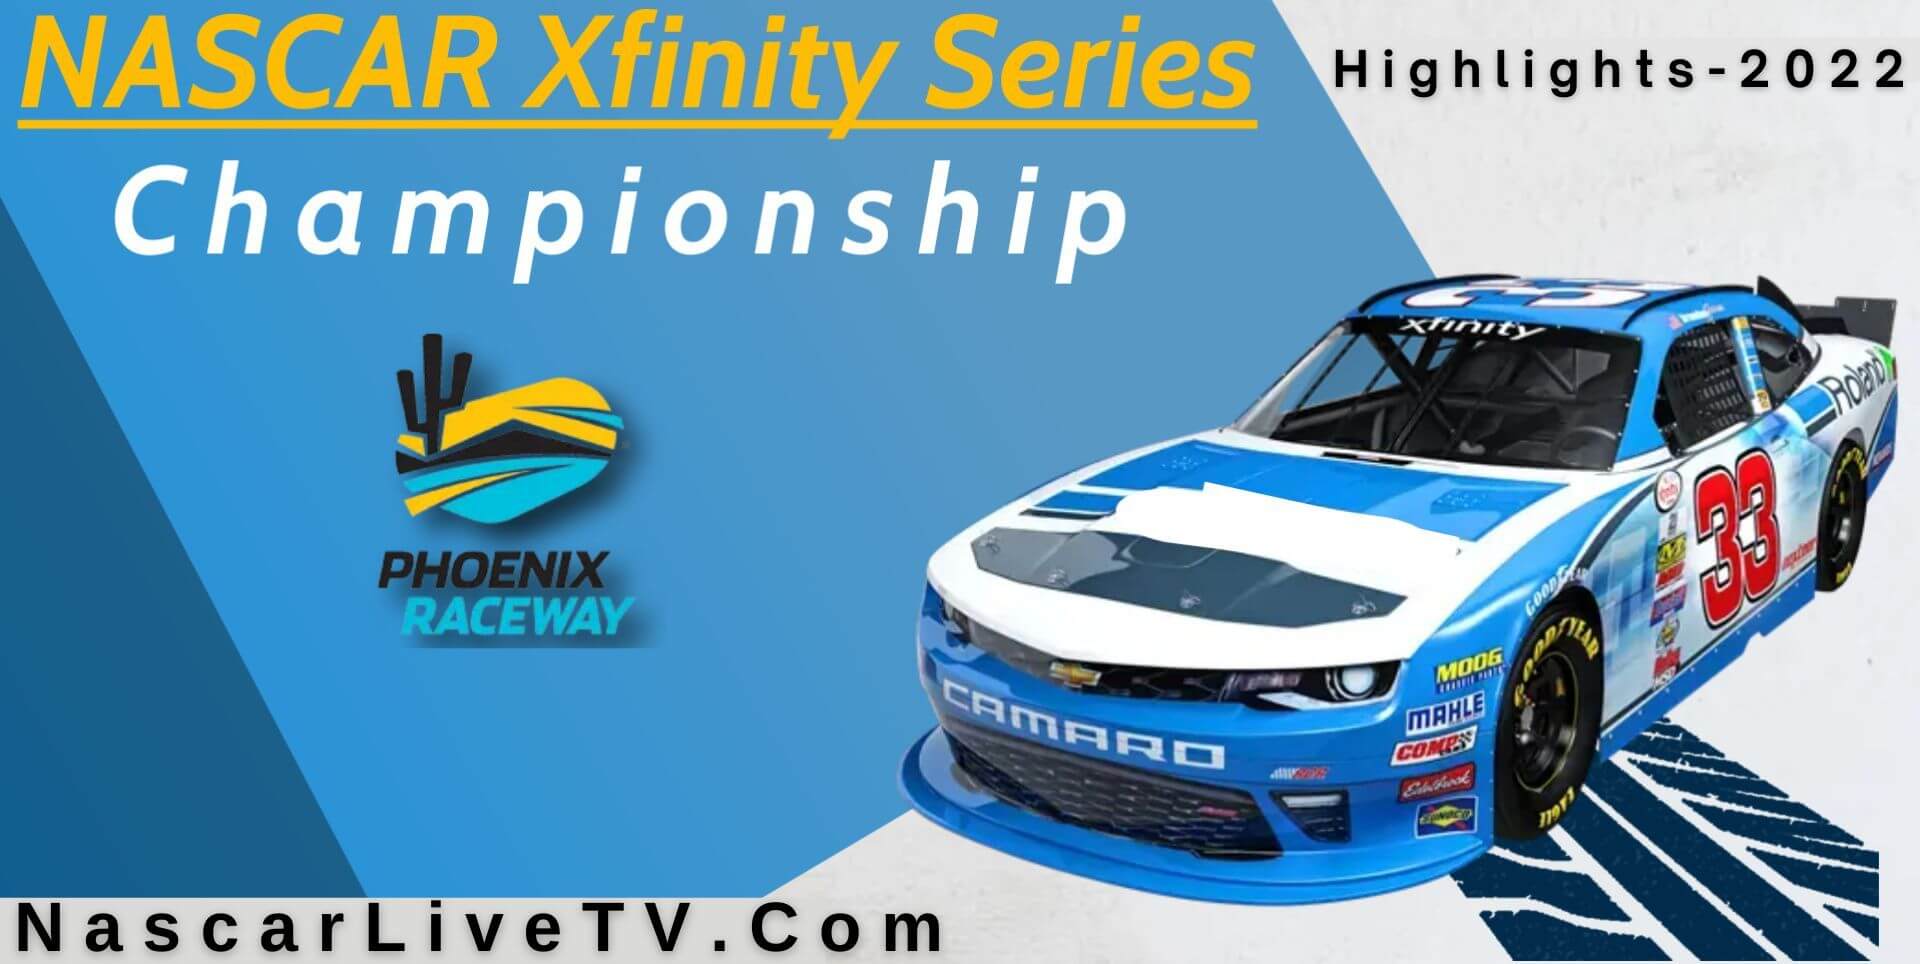 NASCAR Xfinity Series Highlights Of Championship 2022